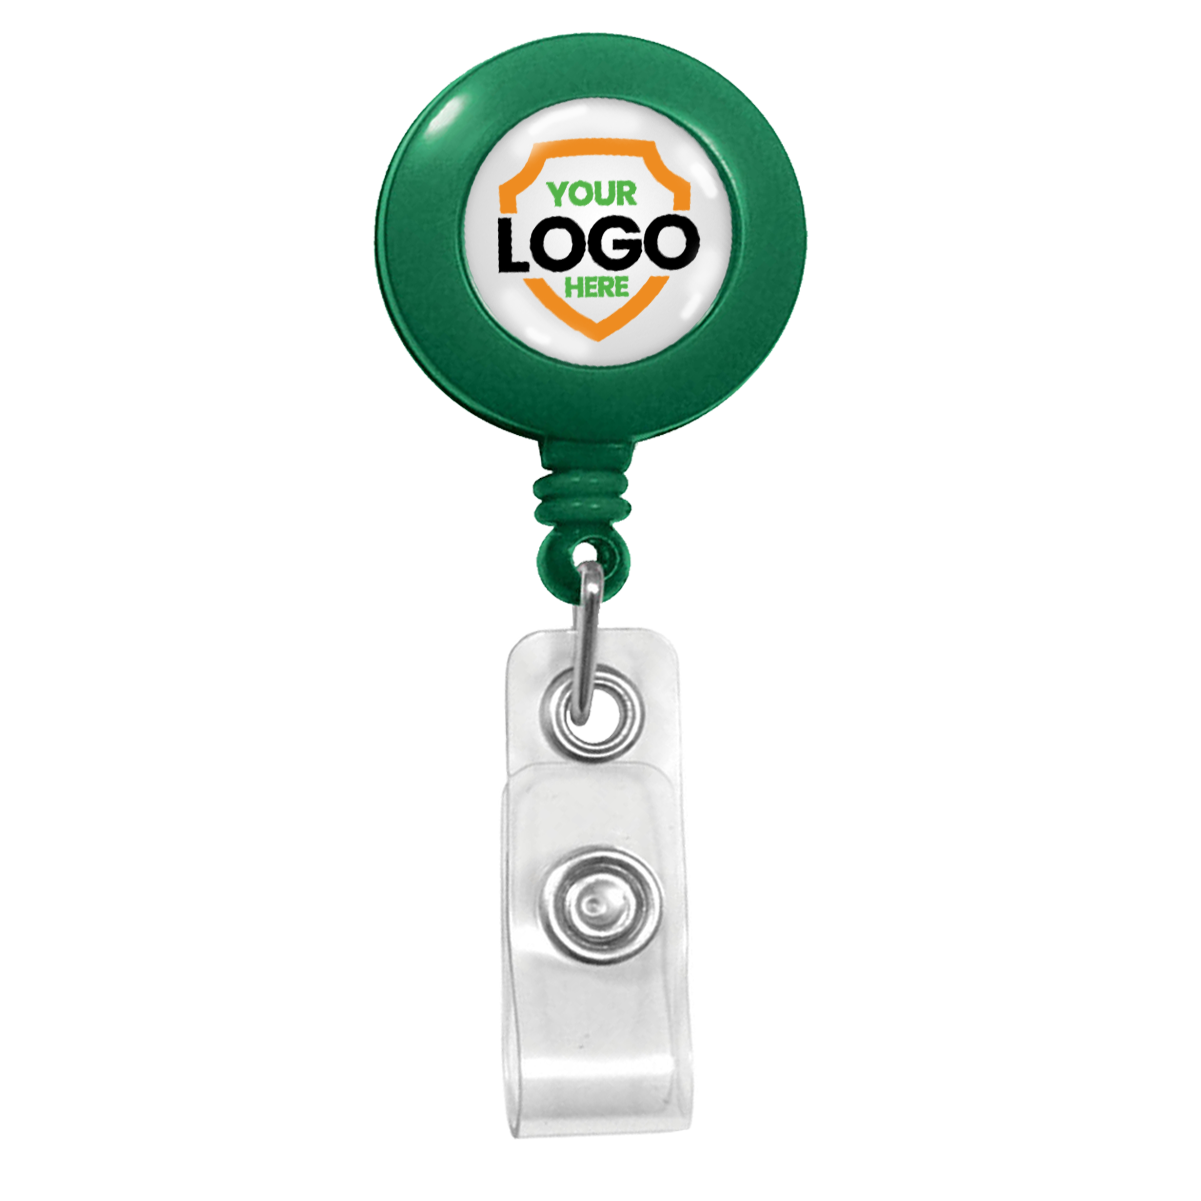 customizable badge reels - standard retractable custom badge reels for business branding 2120-3034 green